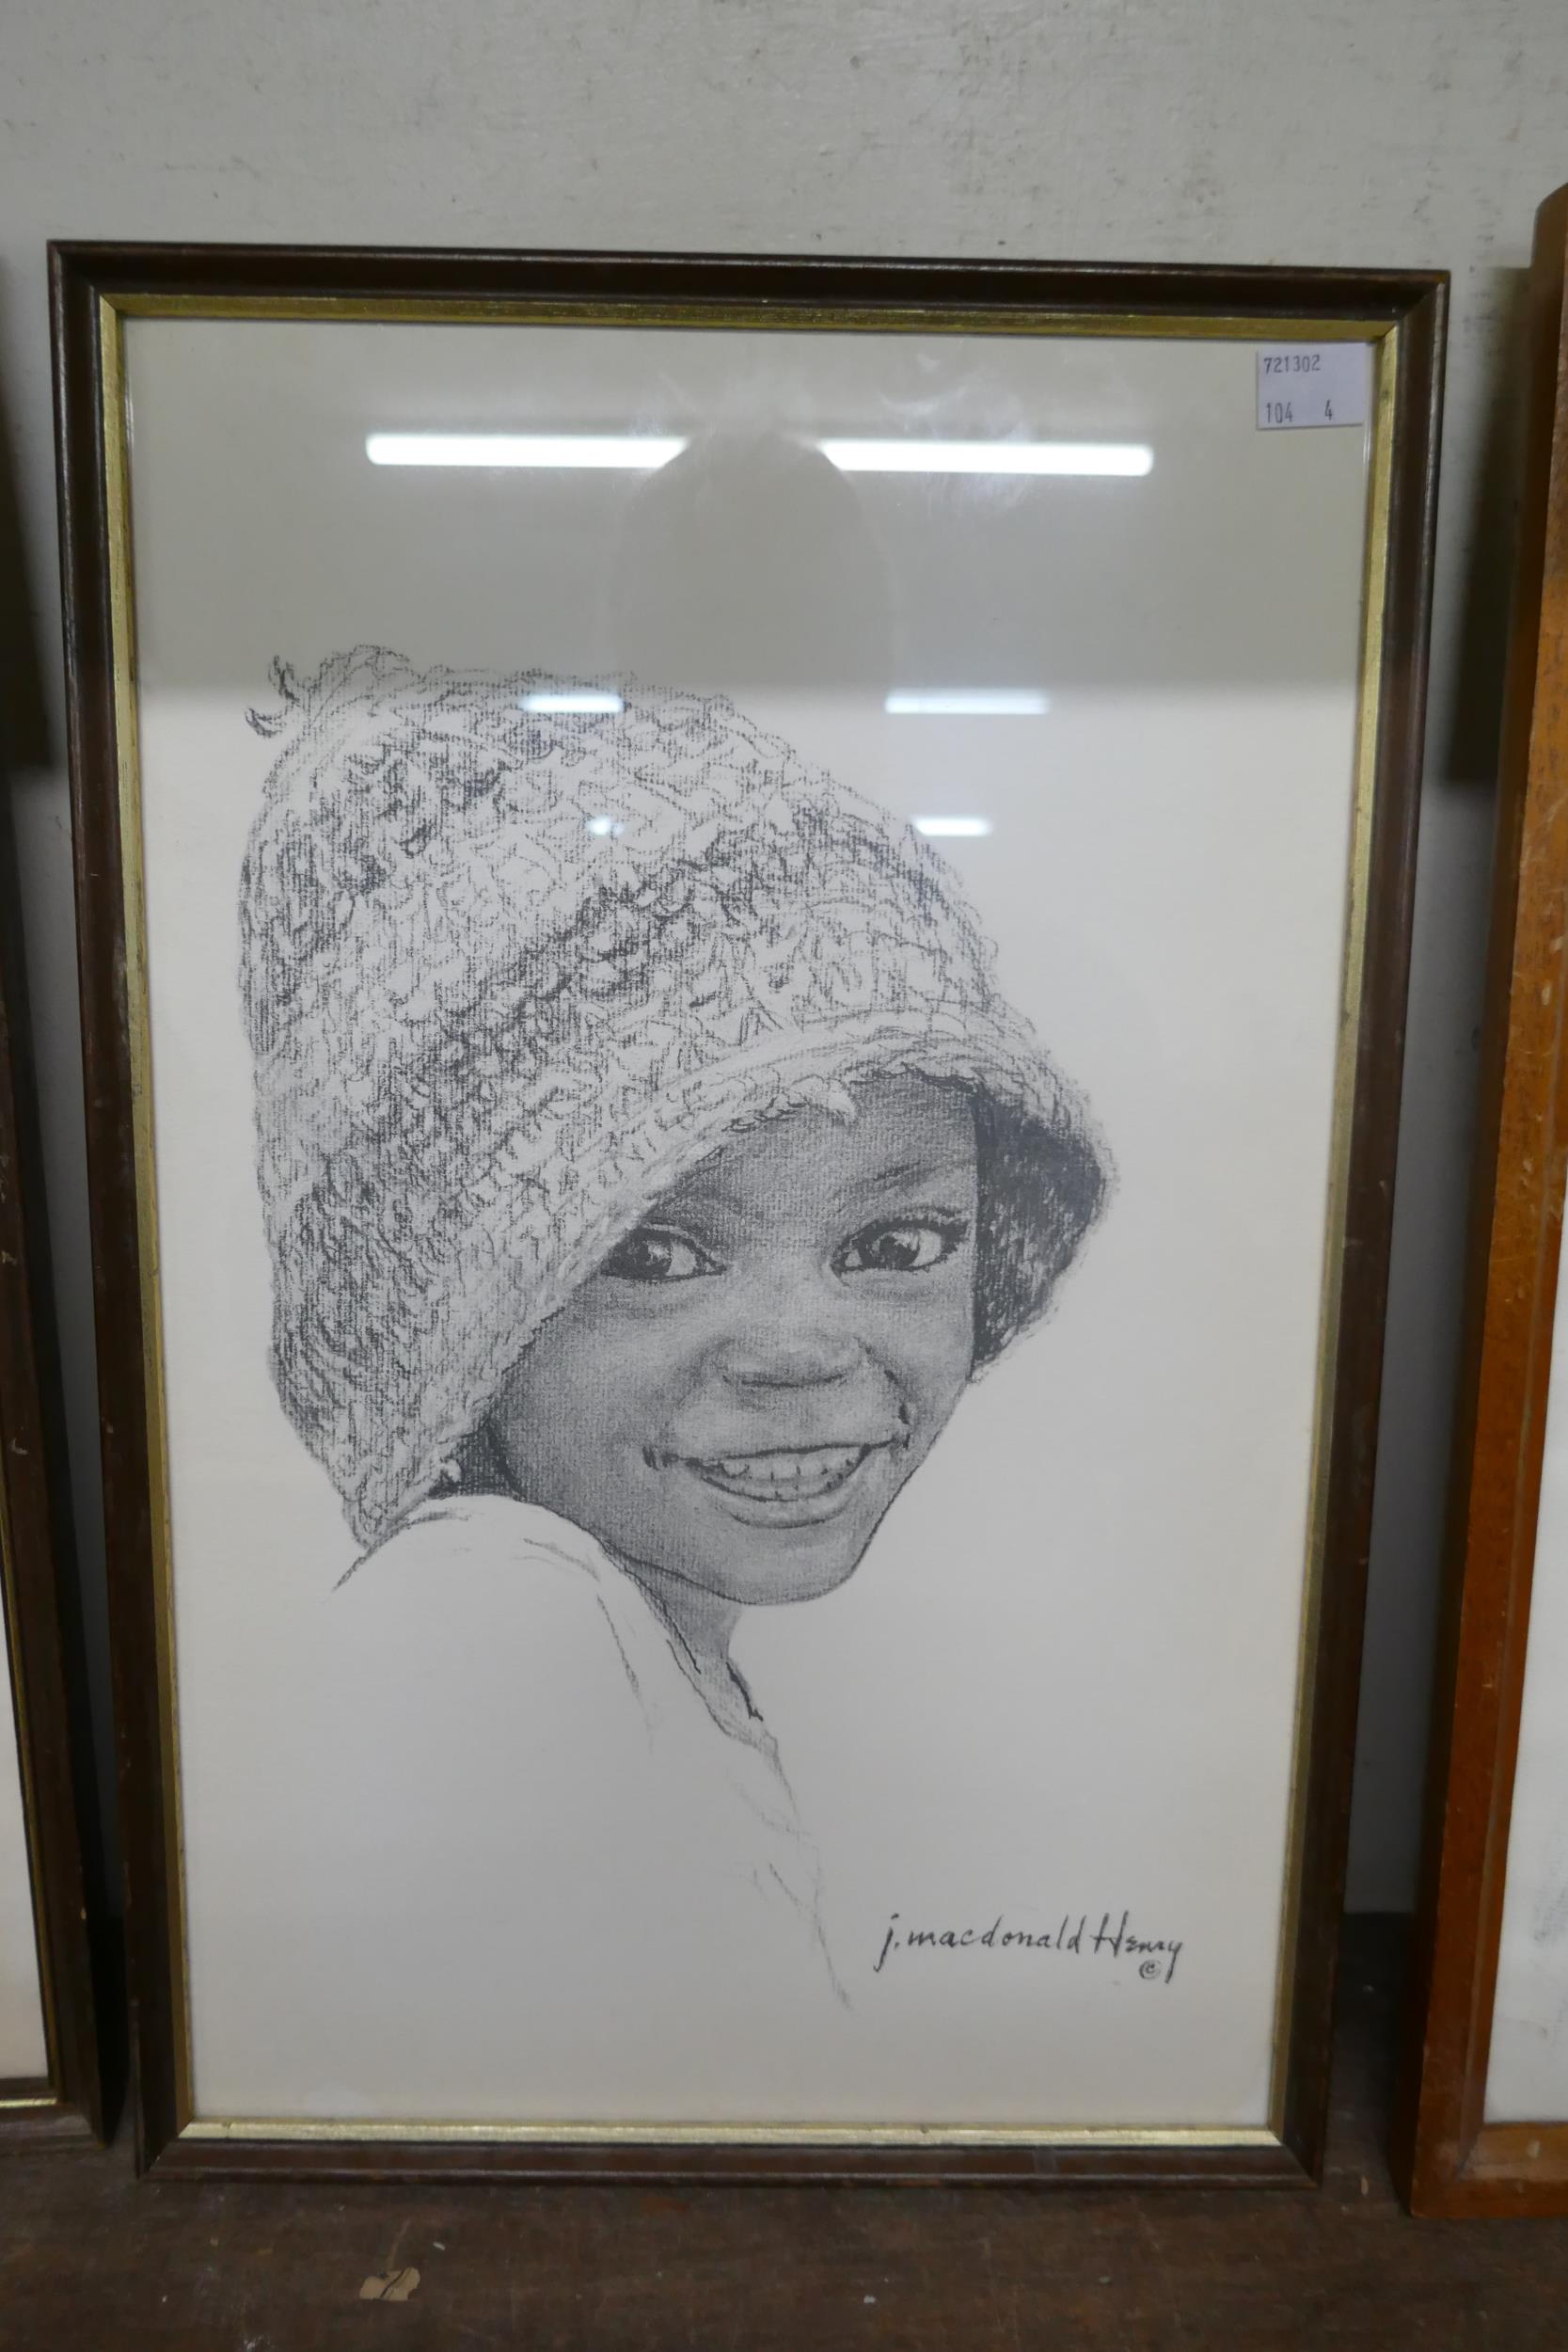 J. Macdonald Henry, four portraits of children, pencil sketches, framed - Image 3 of 5